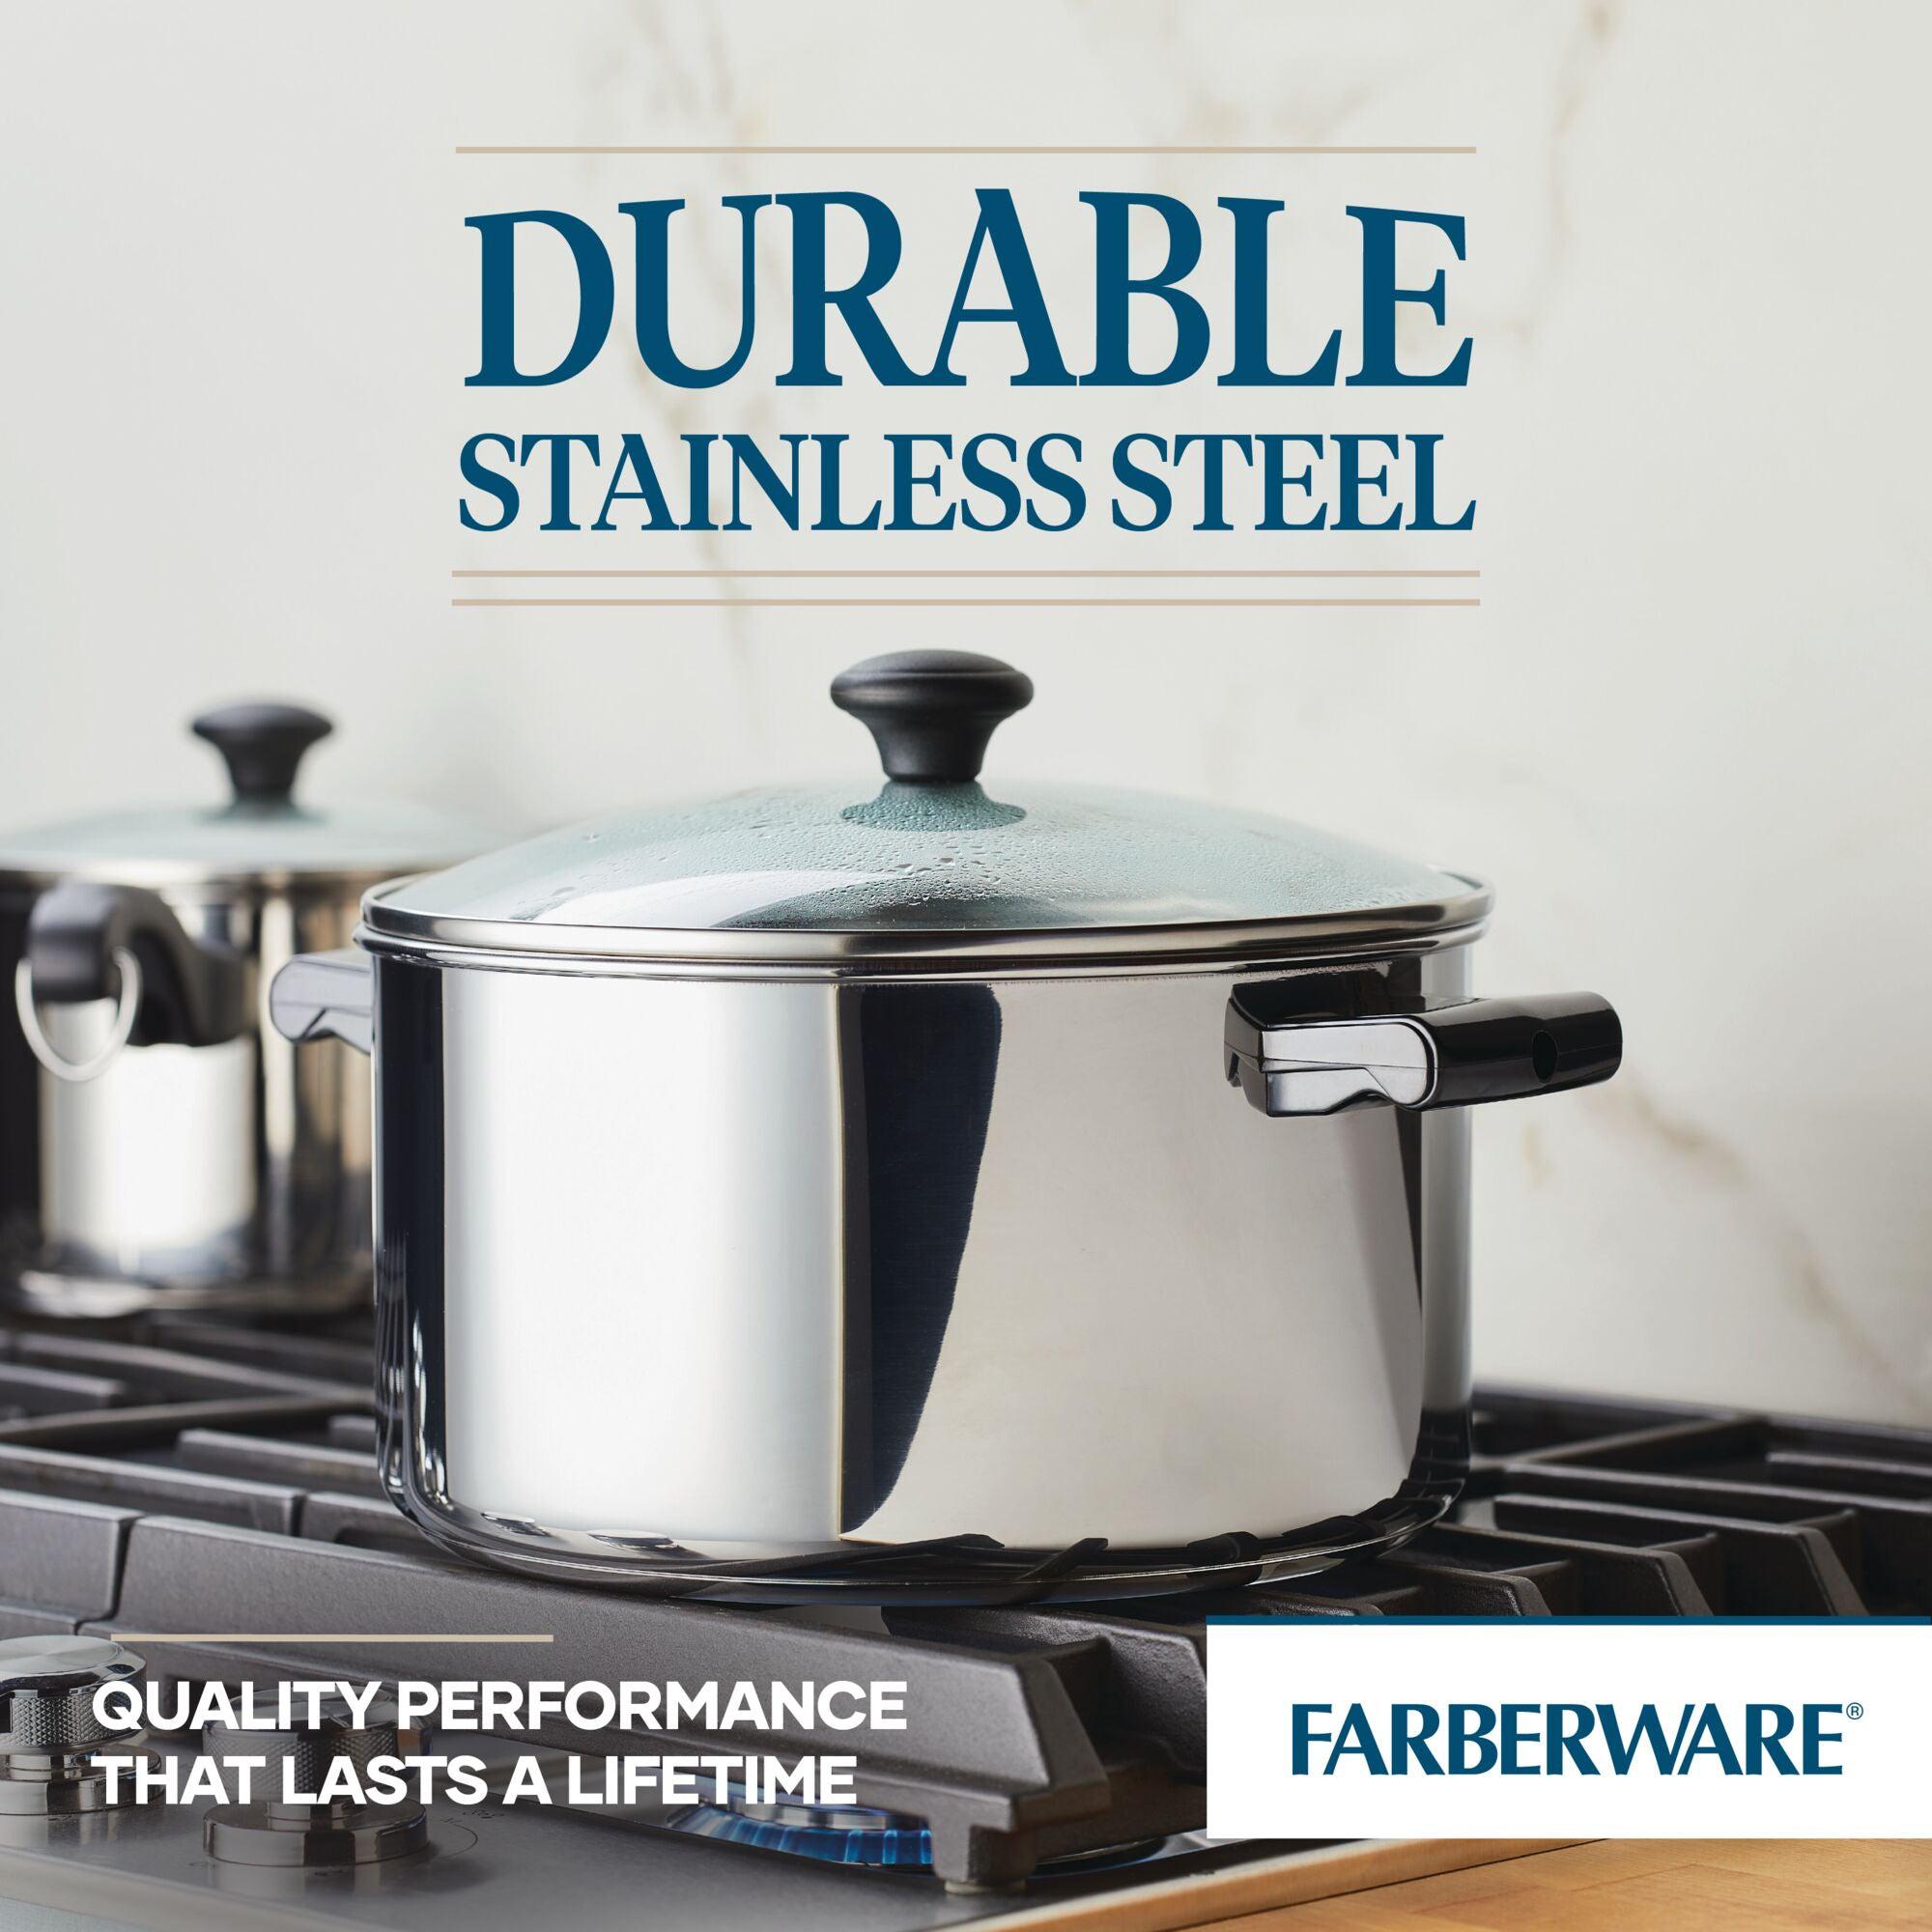 Farberware 12-Piece Stainless Steel Cookware Set